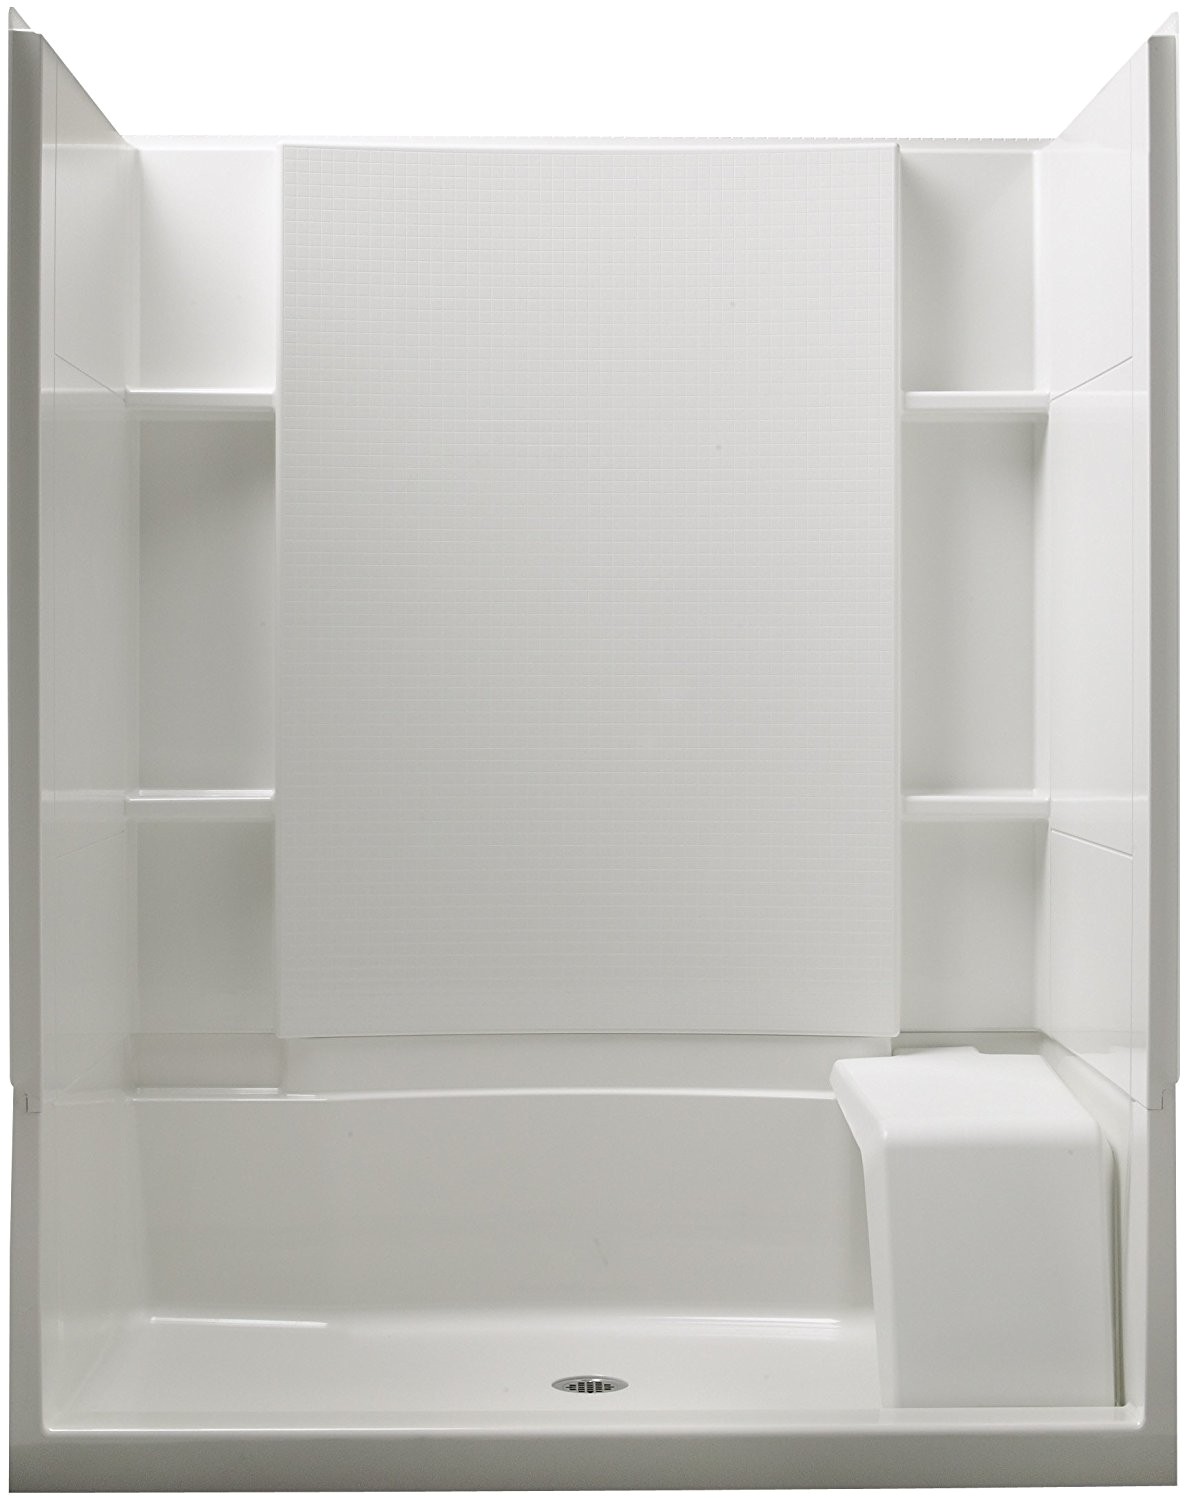 sofa sofa mesmerizing shower stall inserts photo concept bathroom